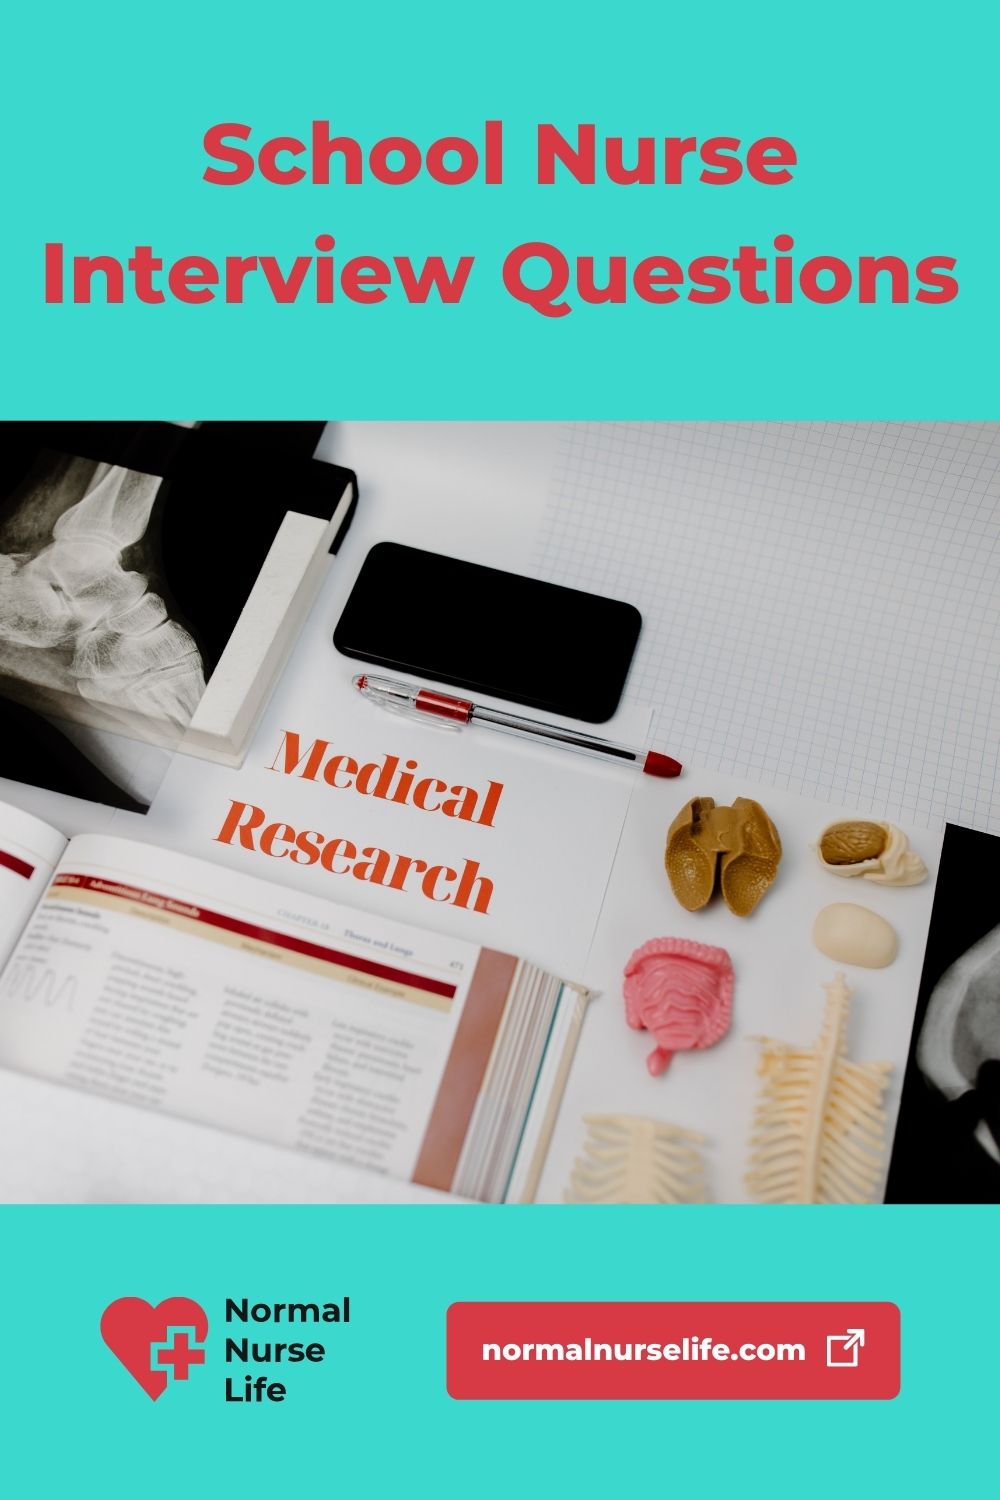 Interview questions for school nurses